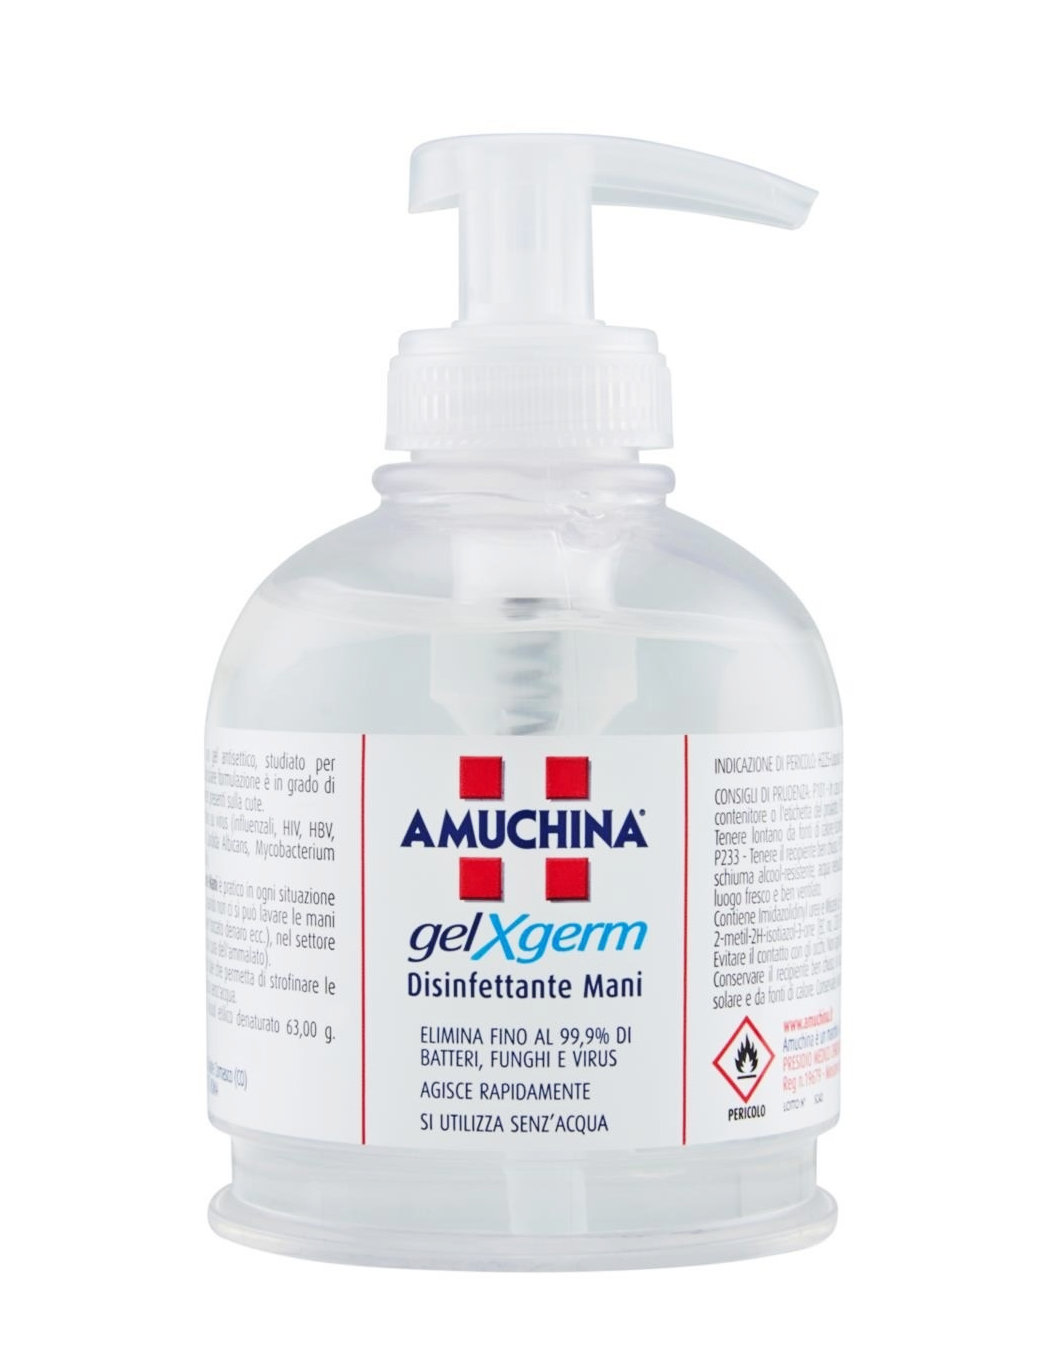 amuchina-gel-x-germ-disinfettante-mani-descrizione_2506.00.html